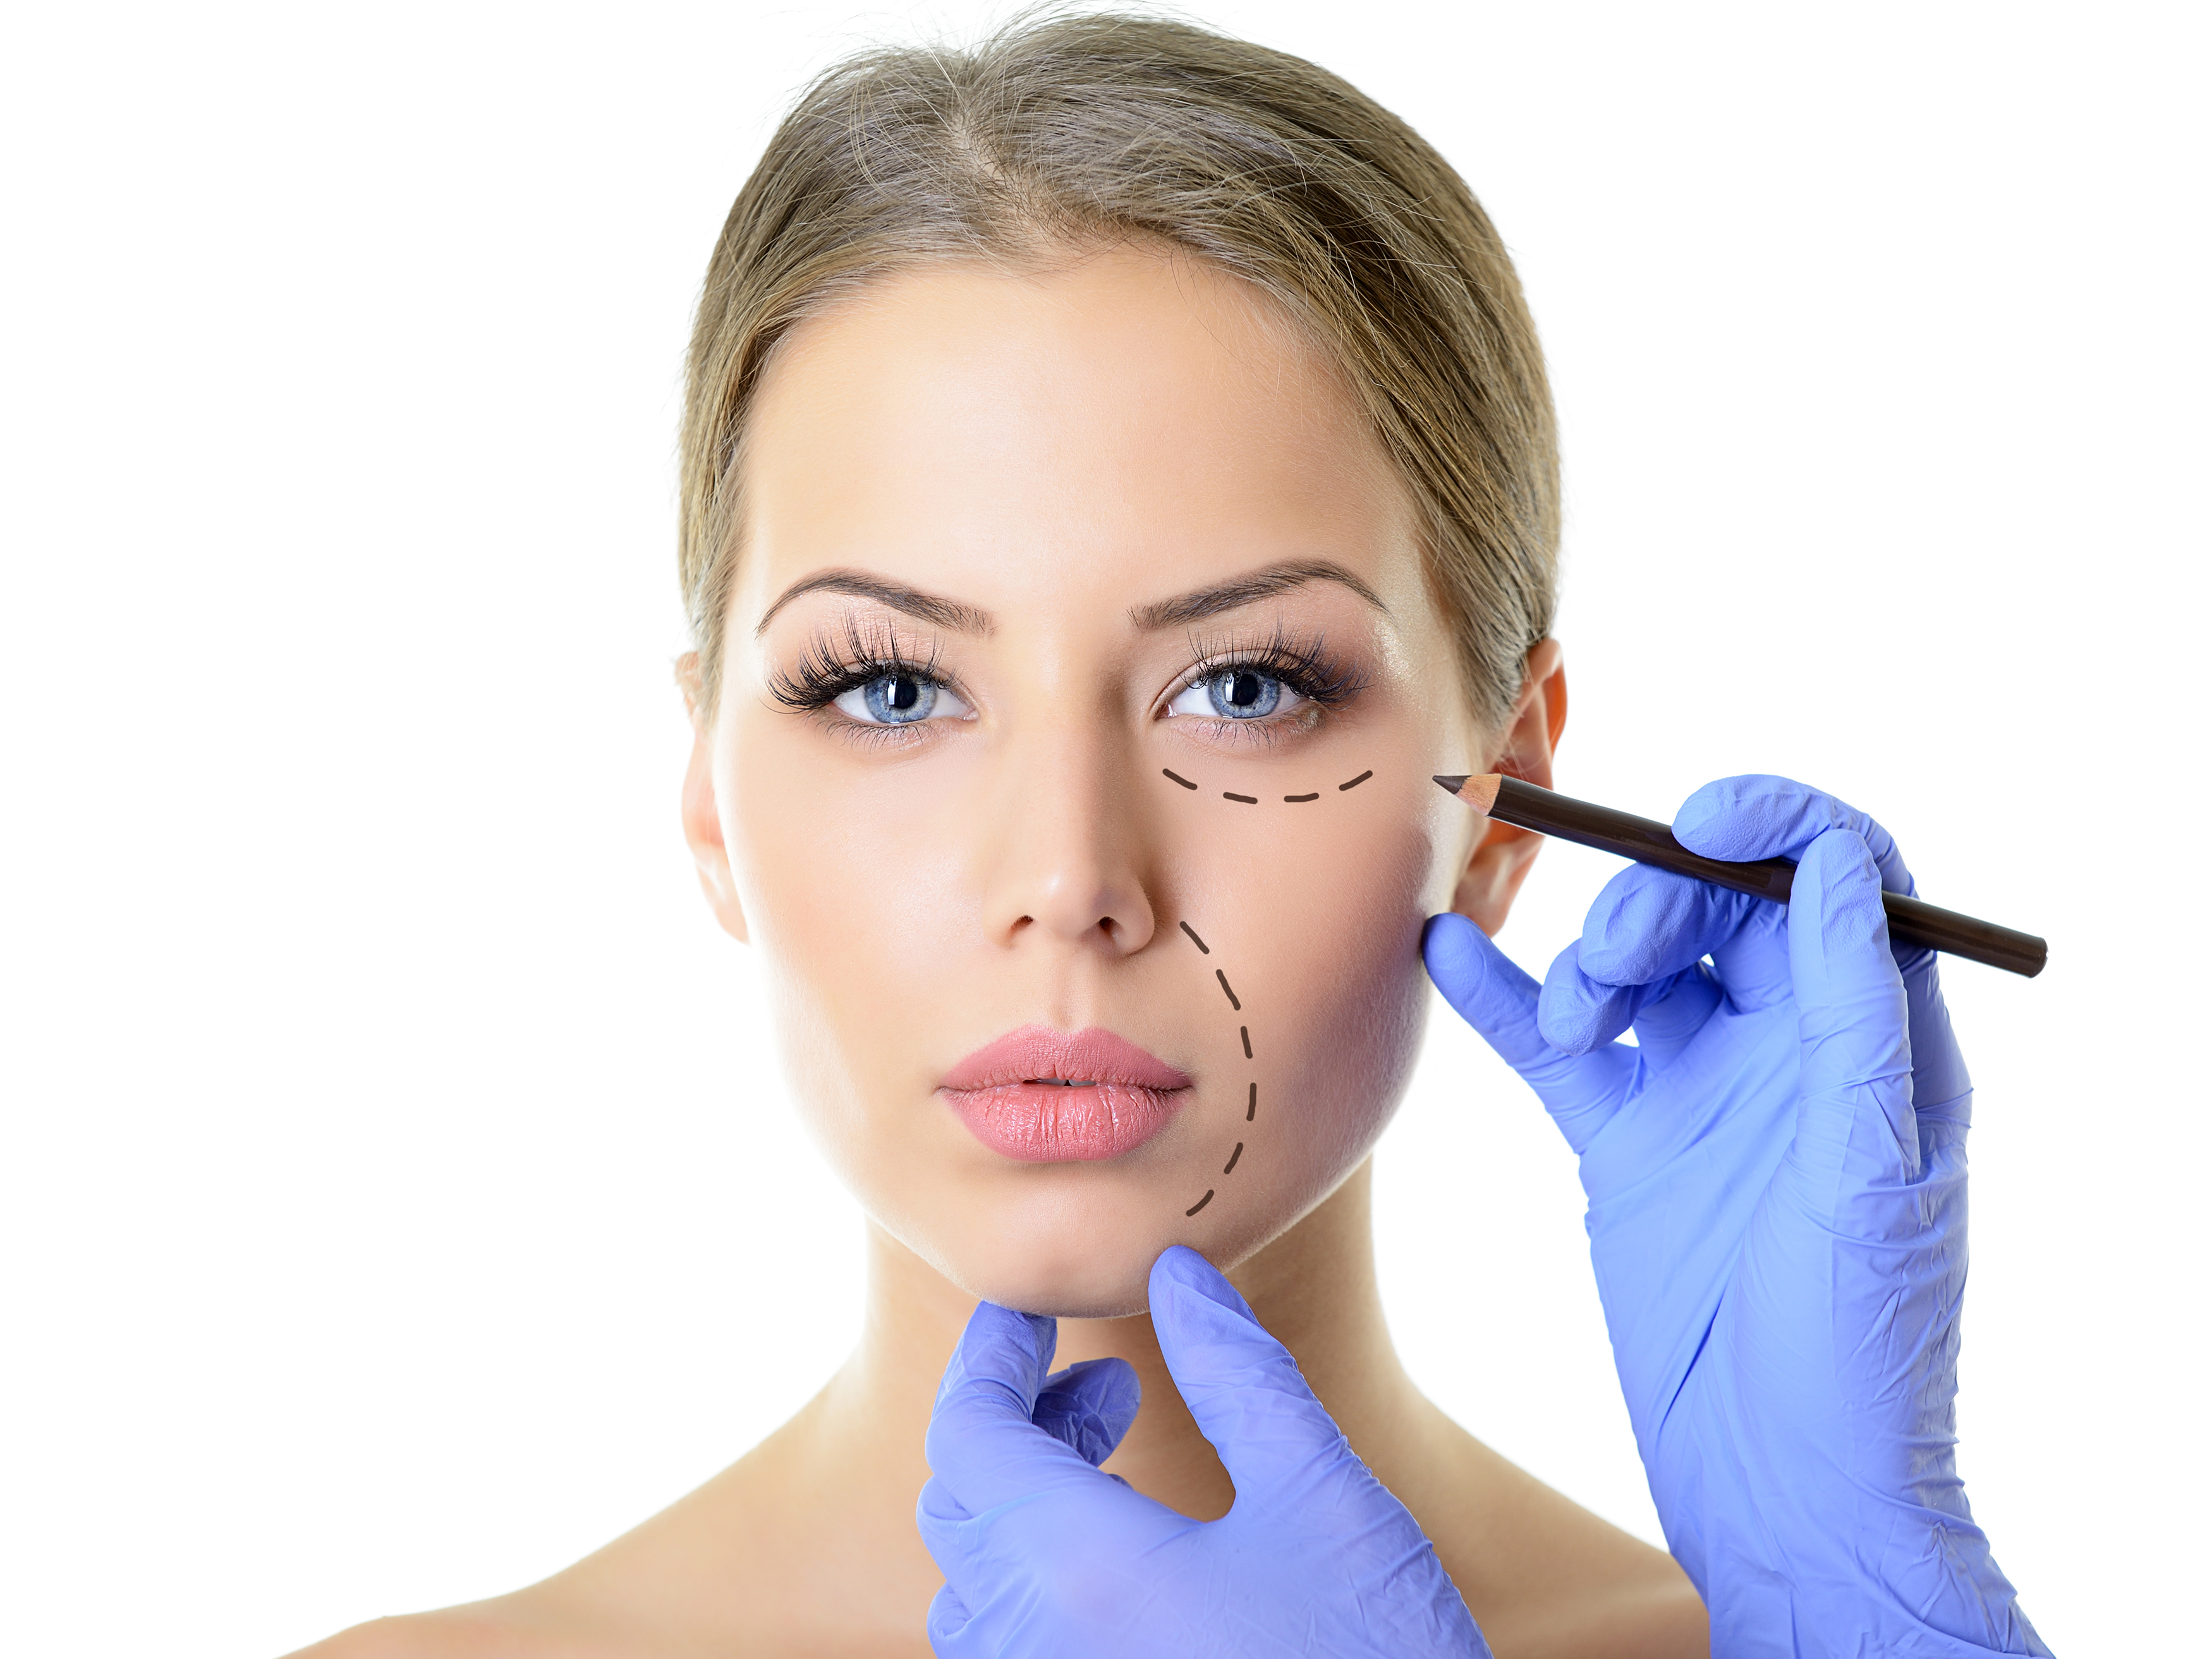 http://medicaltour.irc.com.ge/files/tour/make-up-vs-cosmetic-surgery.jpg